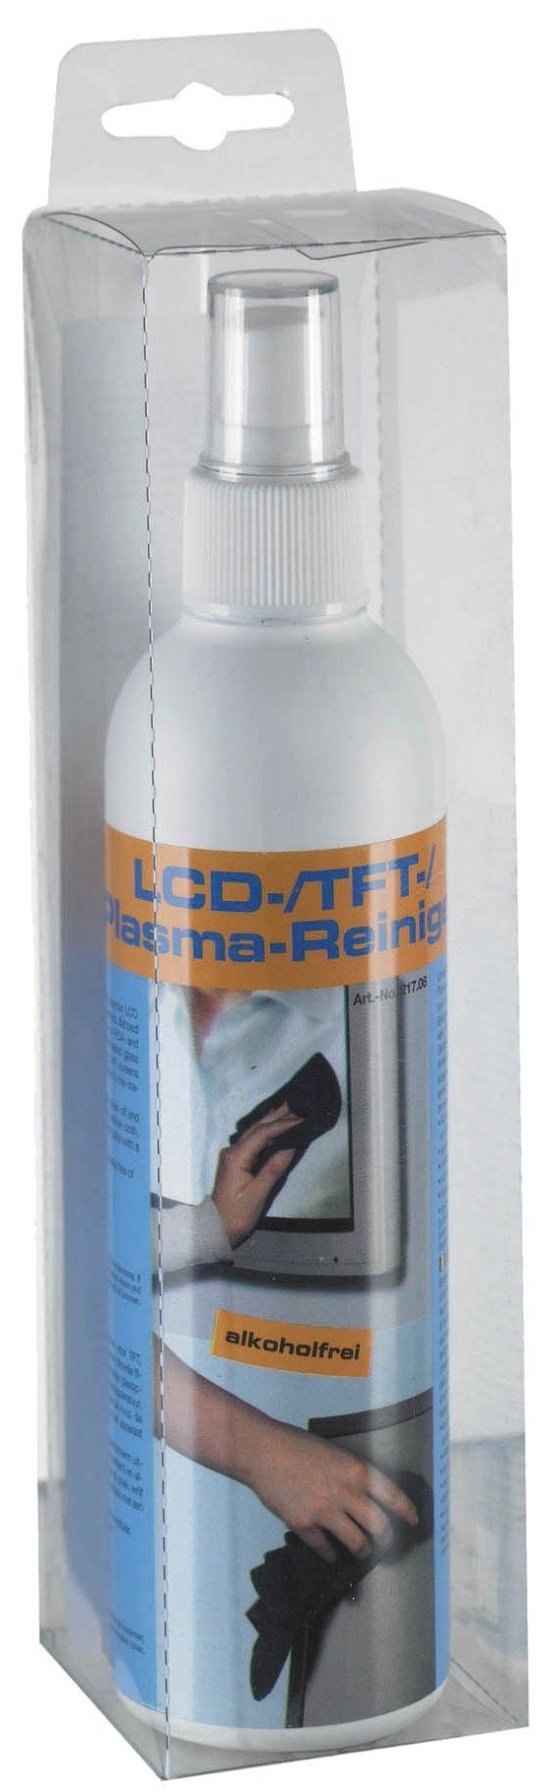 Lcd / tft / plasma Cleaning Pumpspray - Lcd / tft / plasma Cleaning Pumpspray 250ml - Beco (AVACC) - Lcd / tft / plasma Cleaning Pumpspray - Koopwaar - Beco - 4000976217064 - 